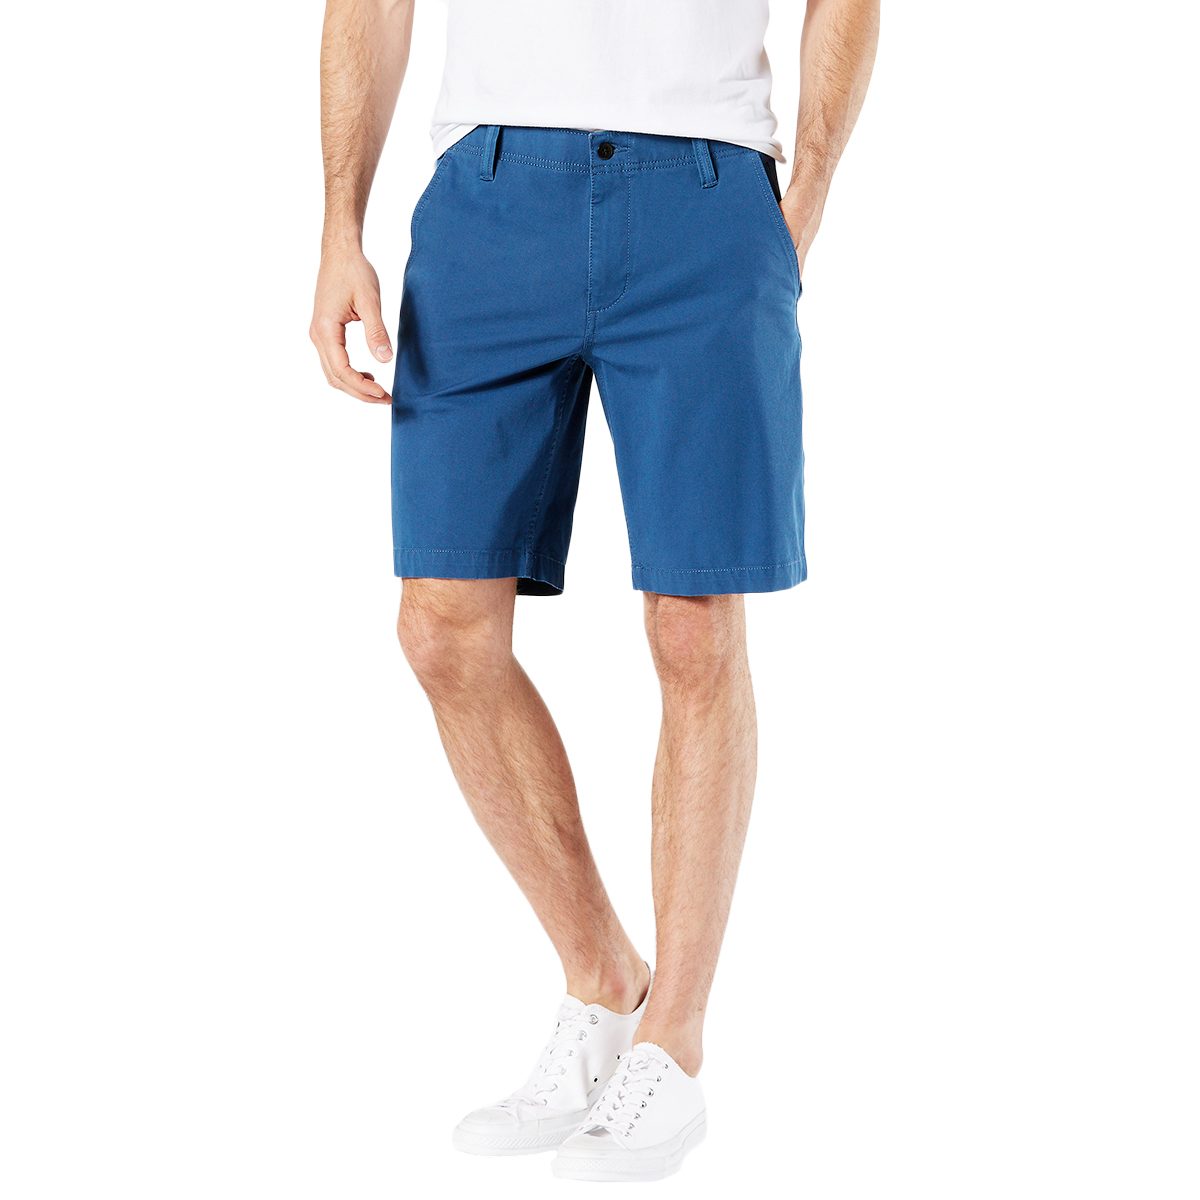 Dockers Men's Straight Fit Chino Smart 360 Flex Shorts - Blue, 40